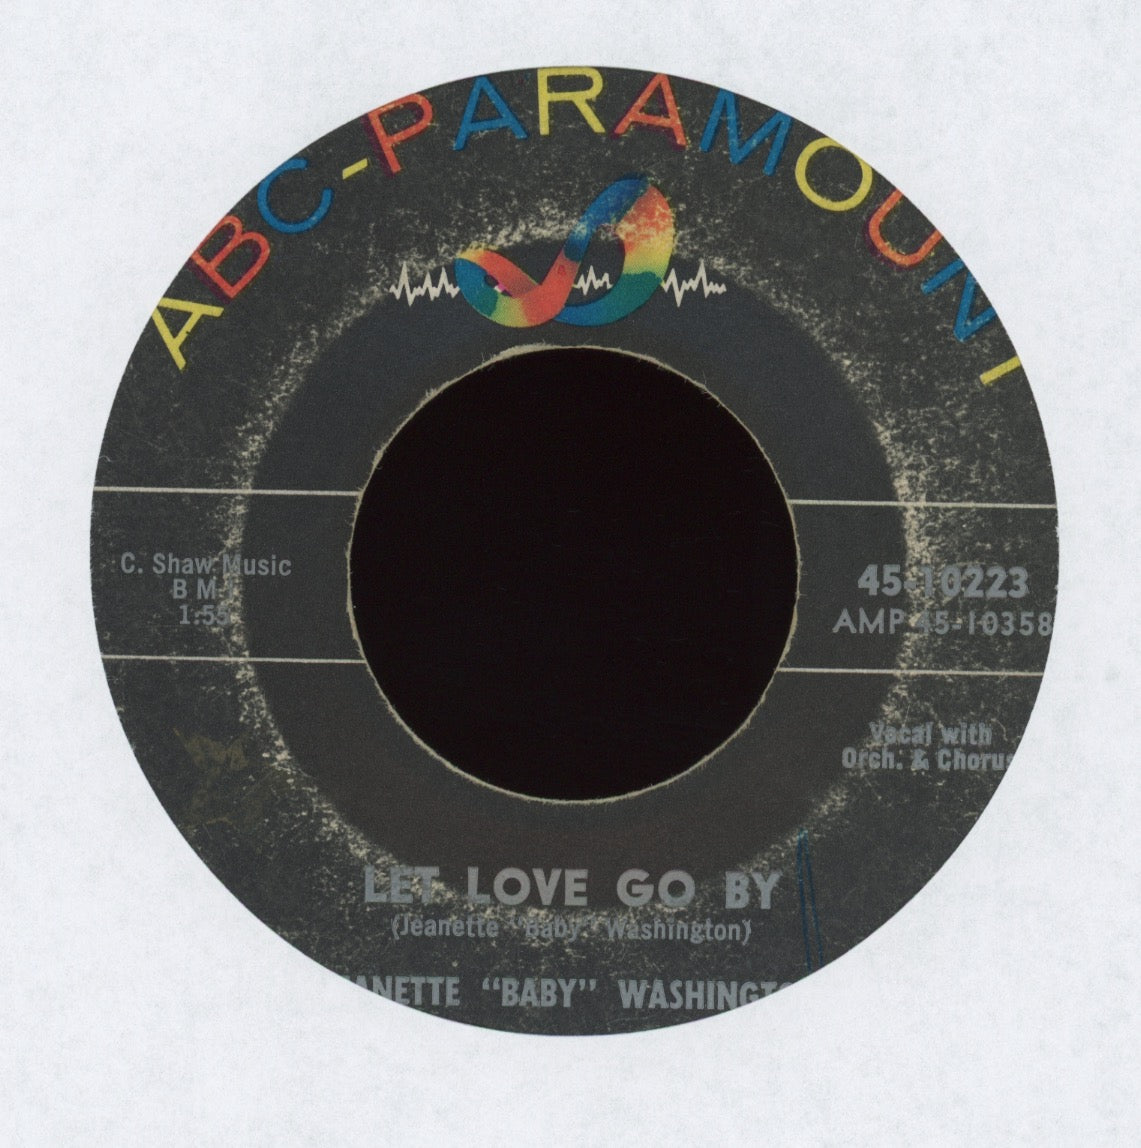 Baby Washington - Let Love Go By on ABC Paramount